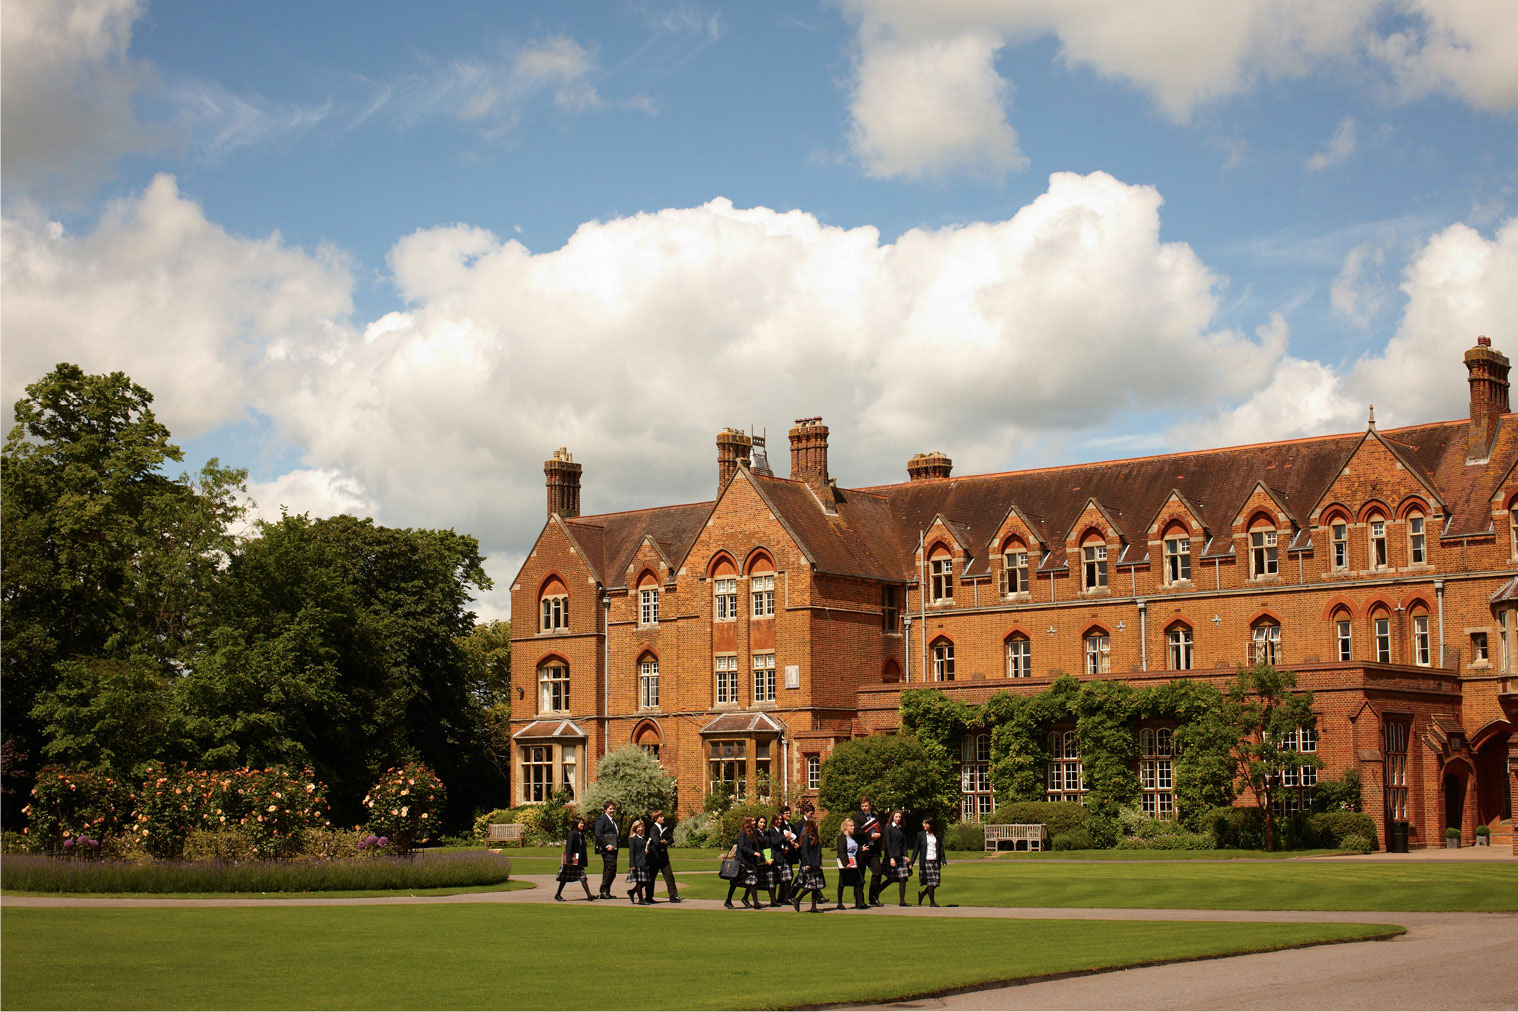 Oxford Spires International / St Edwards School, Oxford